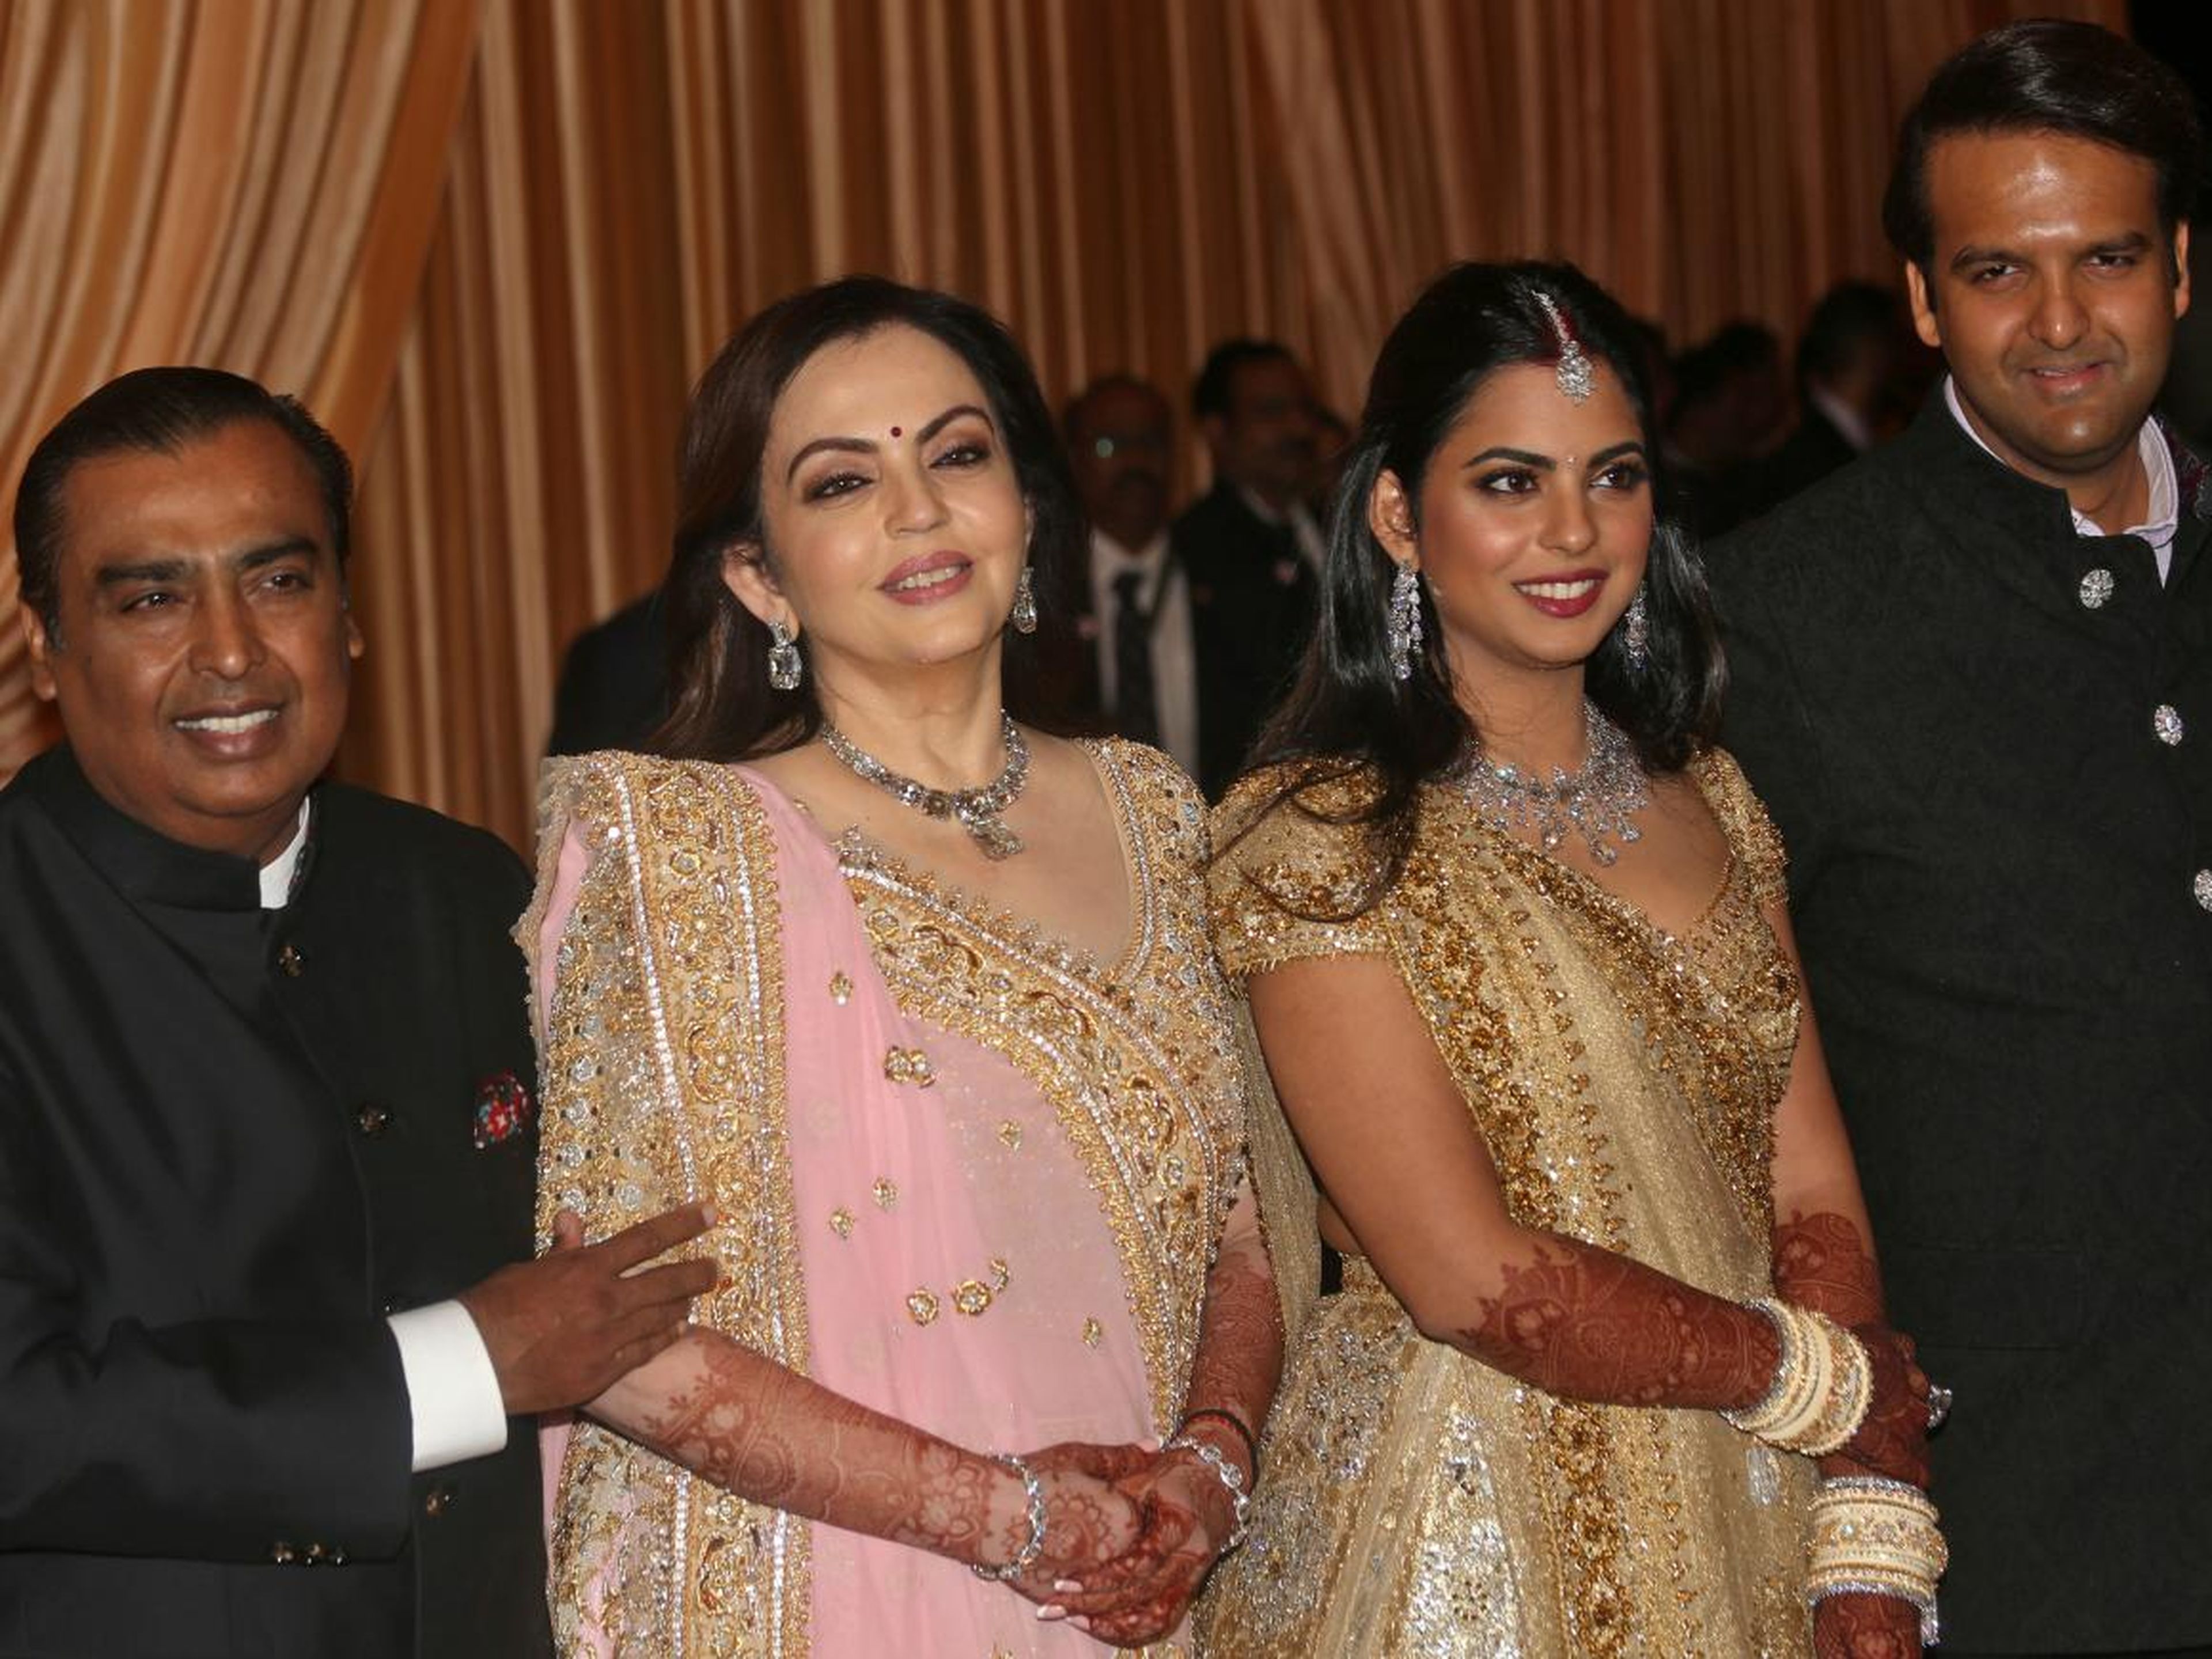 Mukesh Ambani and Nita Ambani with Isha Ambani and her new husband at their wedding reception in Mumbai.